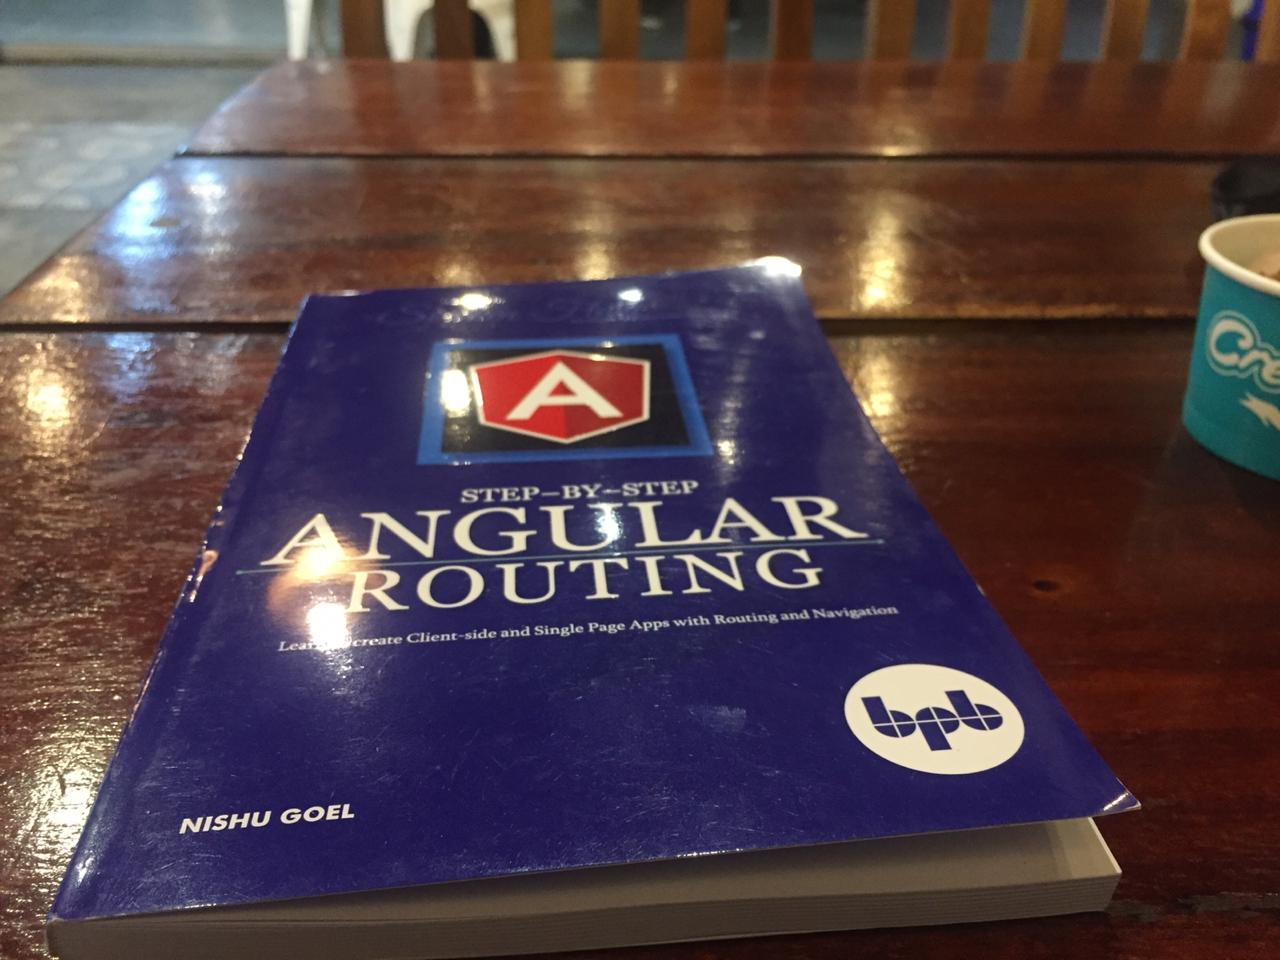 桌上的一本《Angular Route》一书。